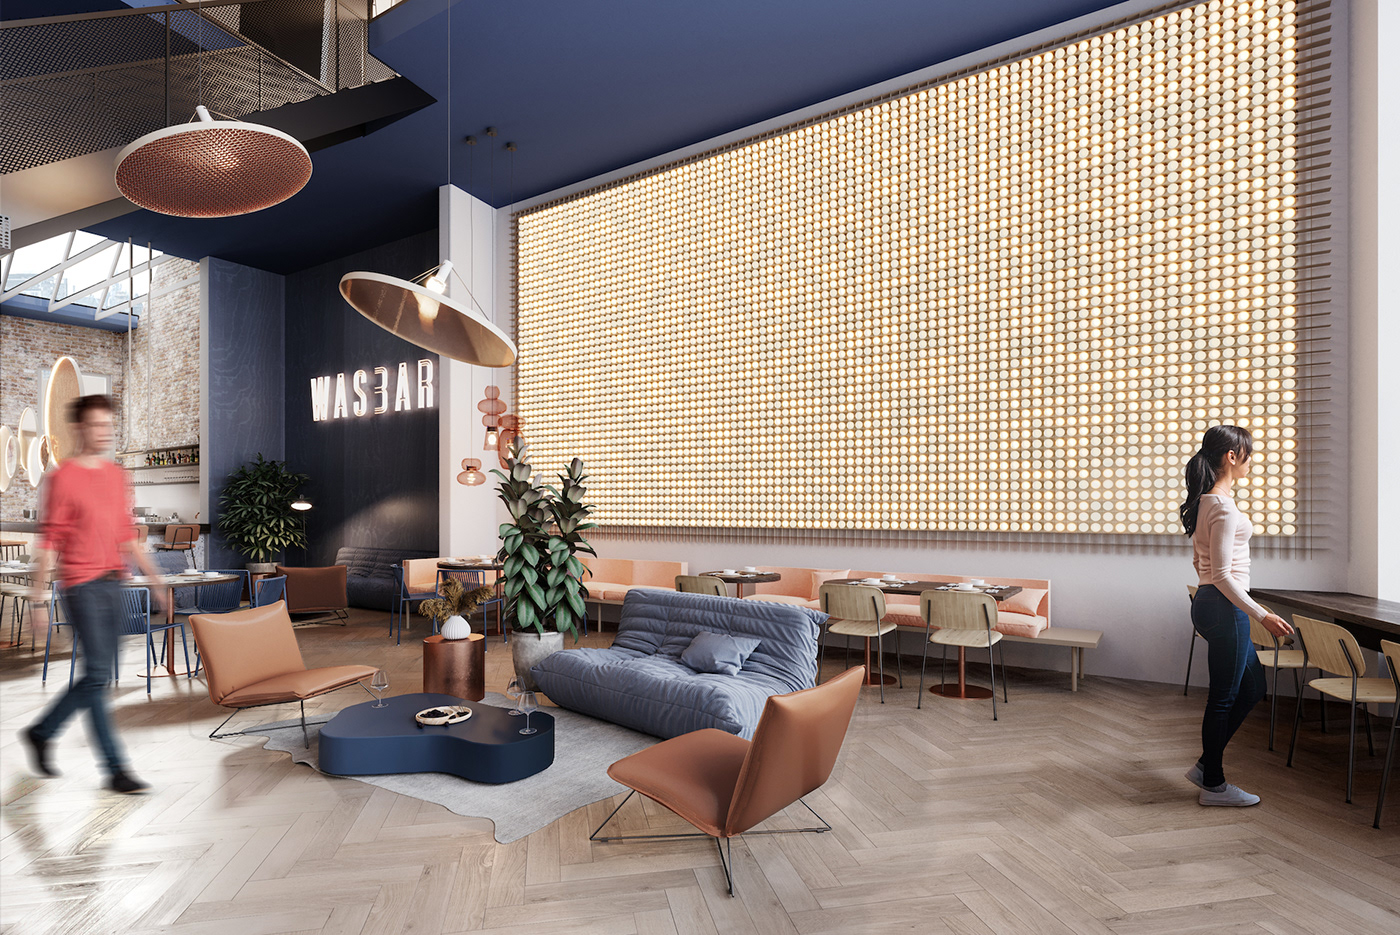 3ds max architecture bardesign Hospitality interiordesign Render restaurant visualization